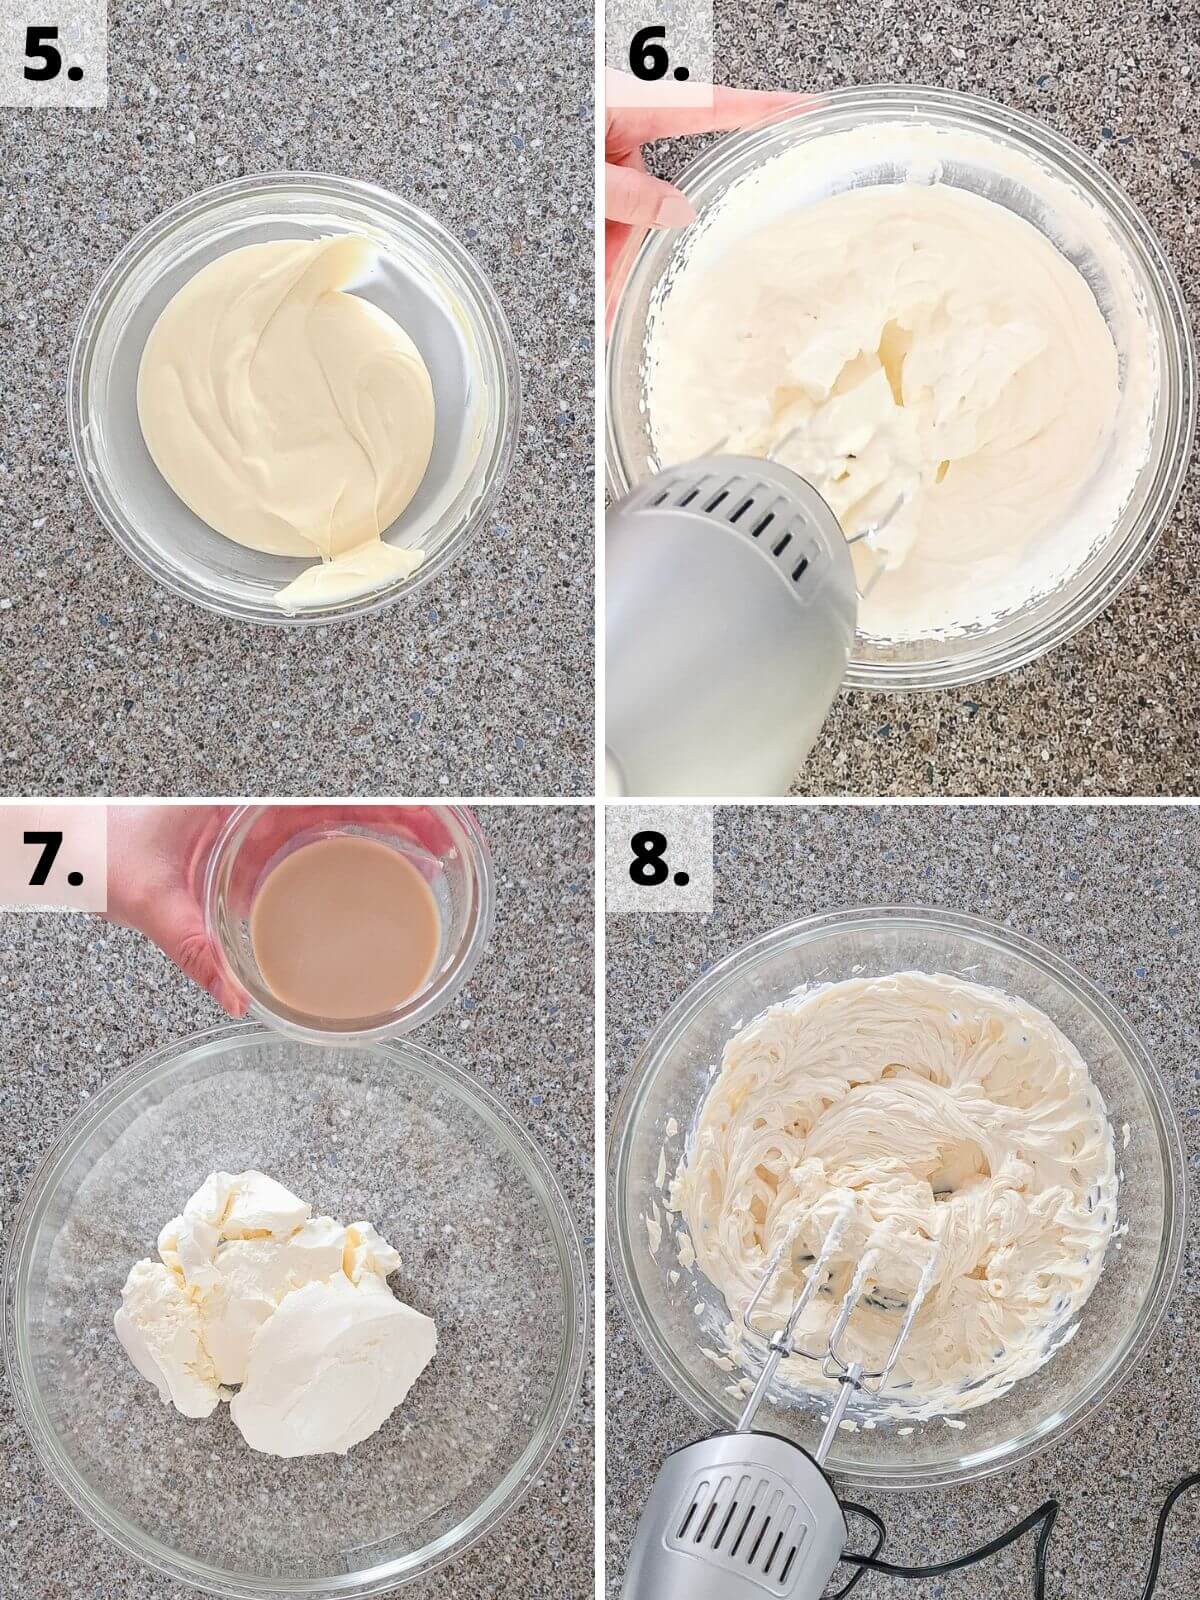 baileys white chocolate no bake cheesecake recipe method steps 5 to 8.